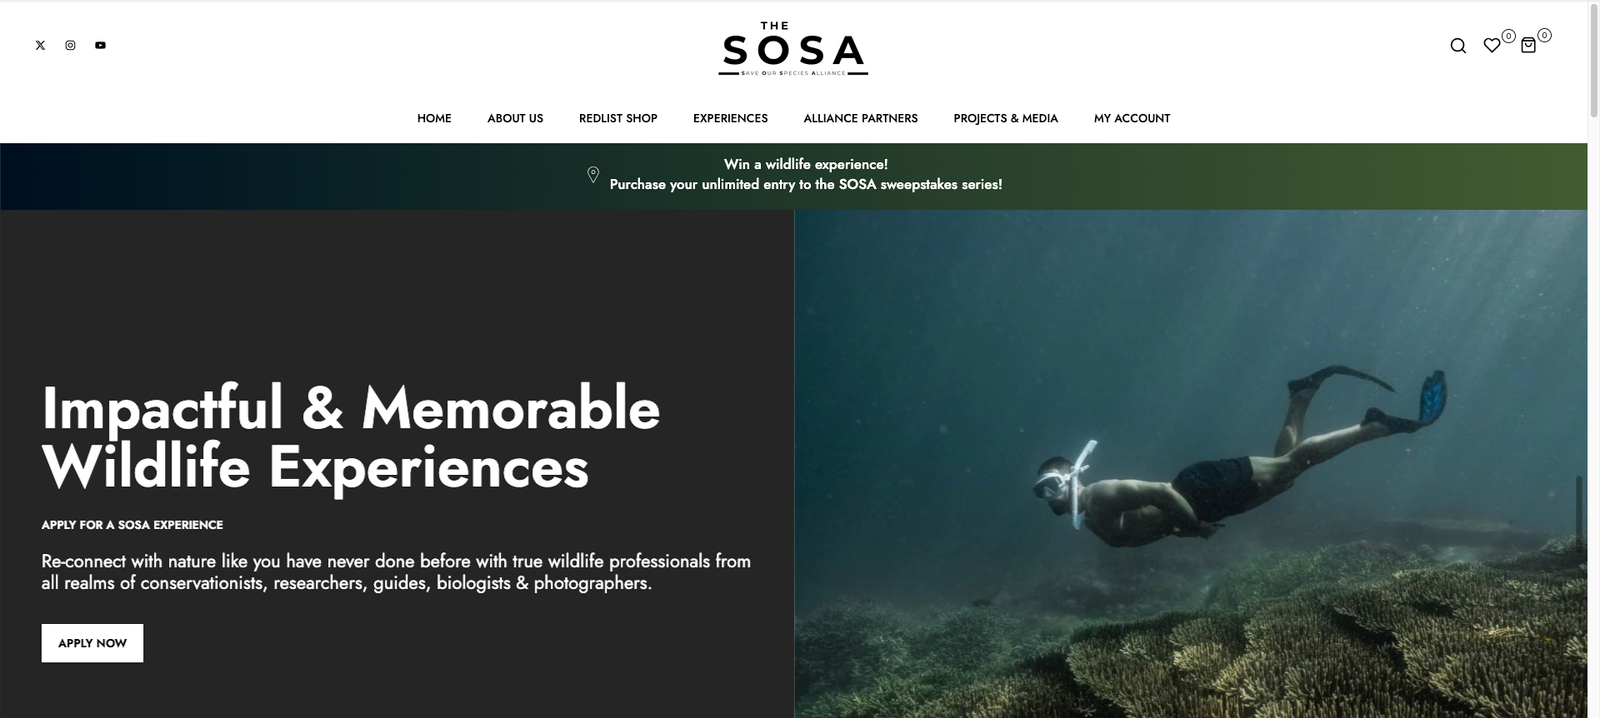 The SOSA Website Screenshot